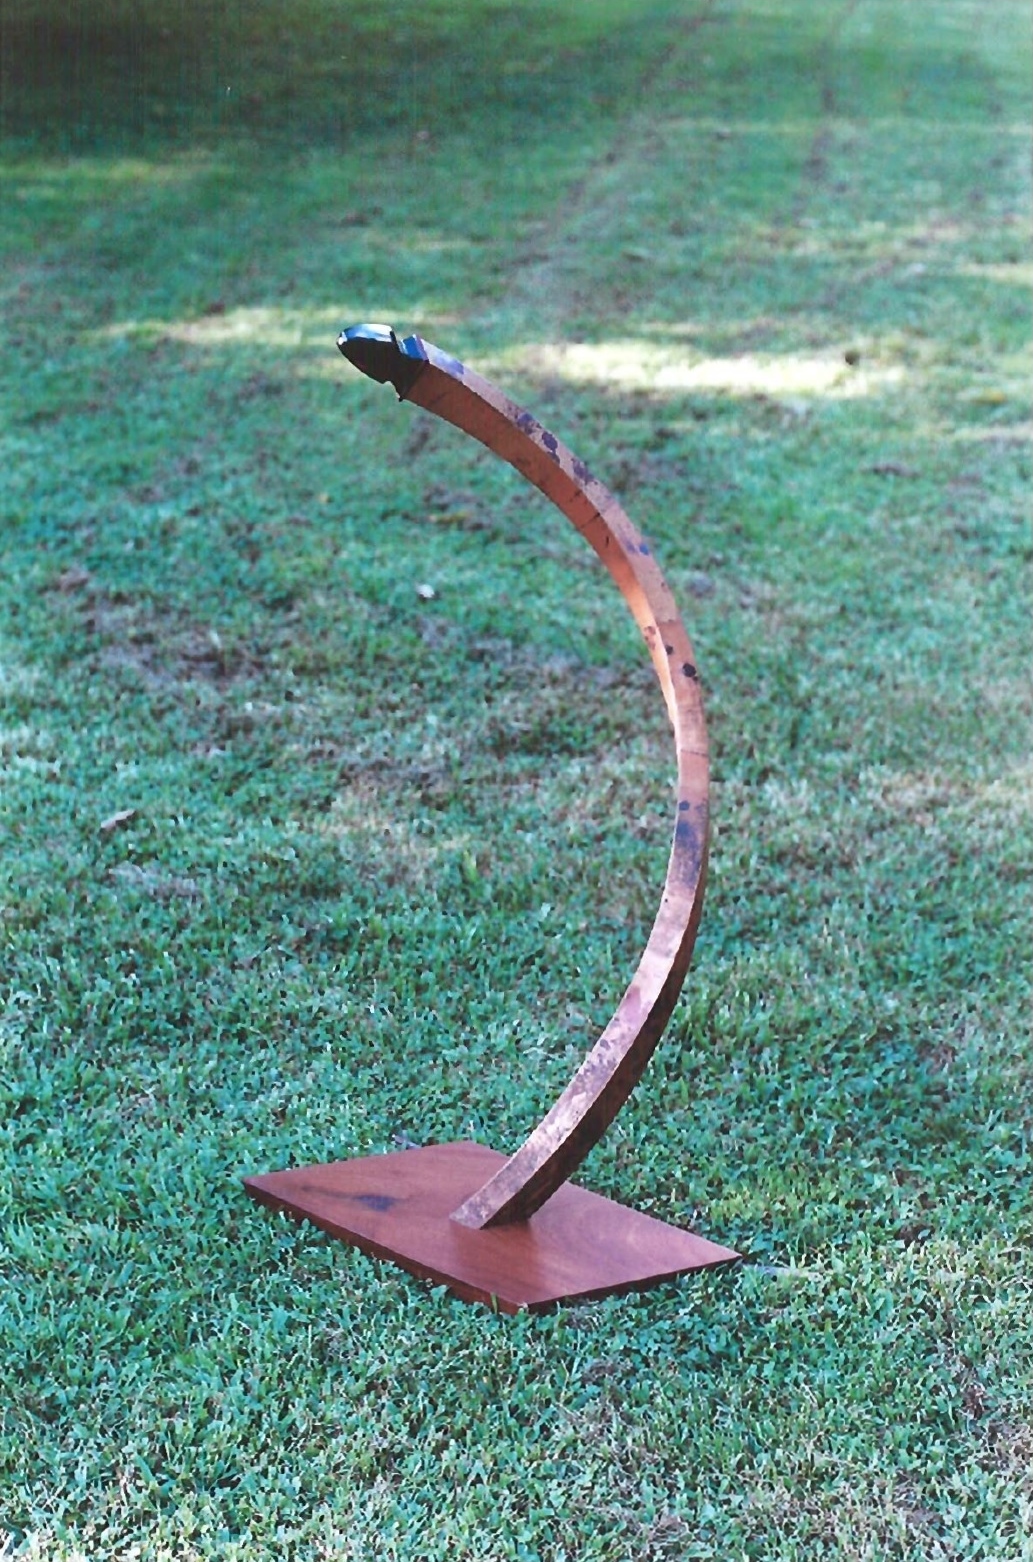 bart sculpture on lawn